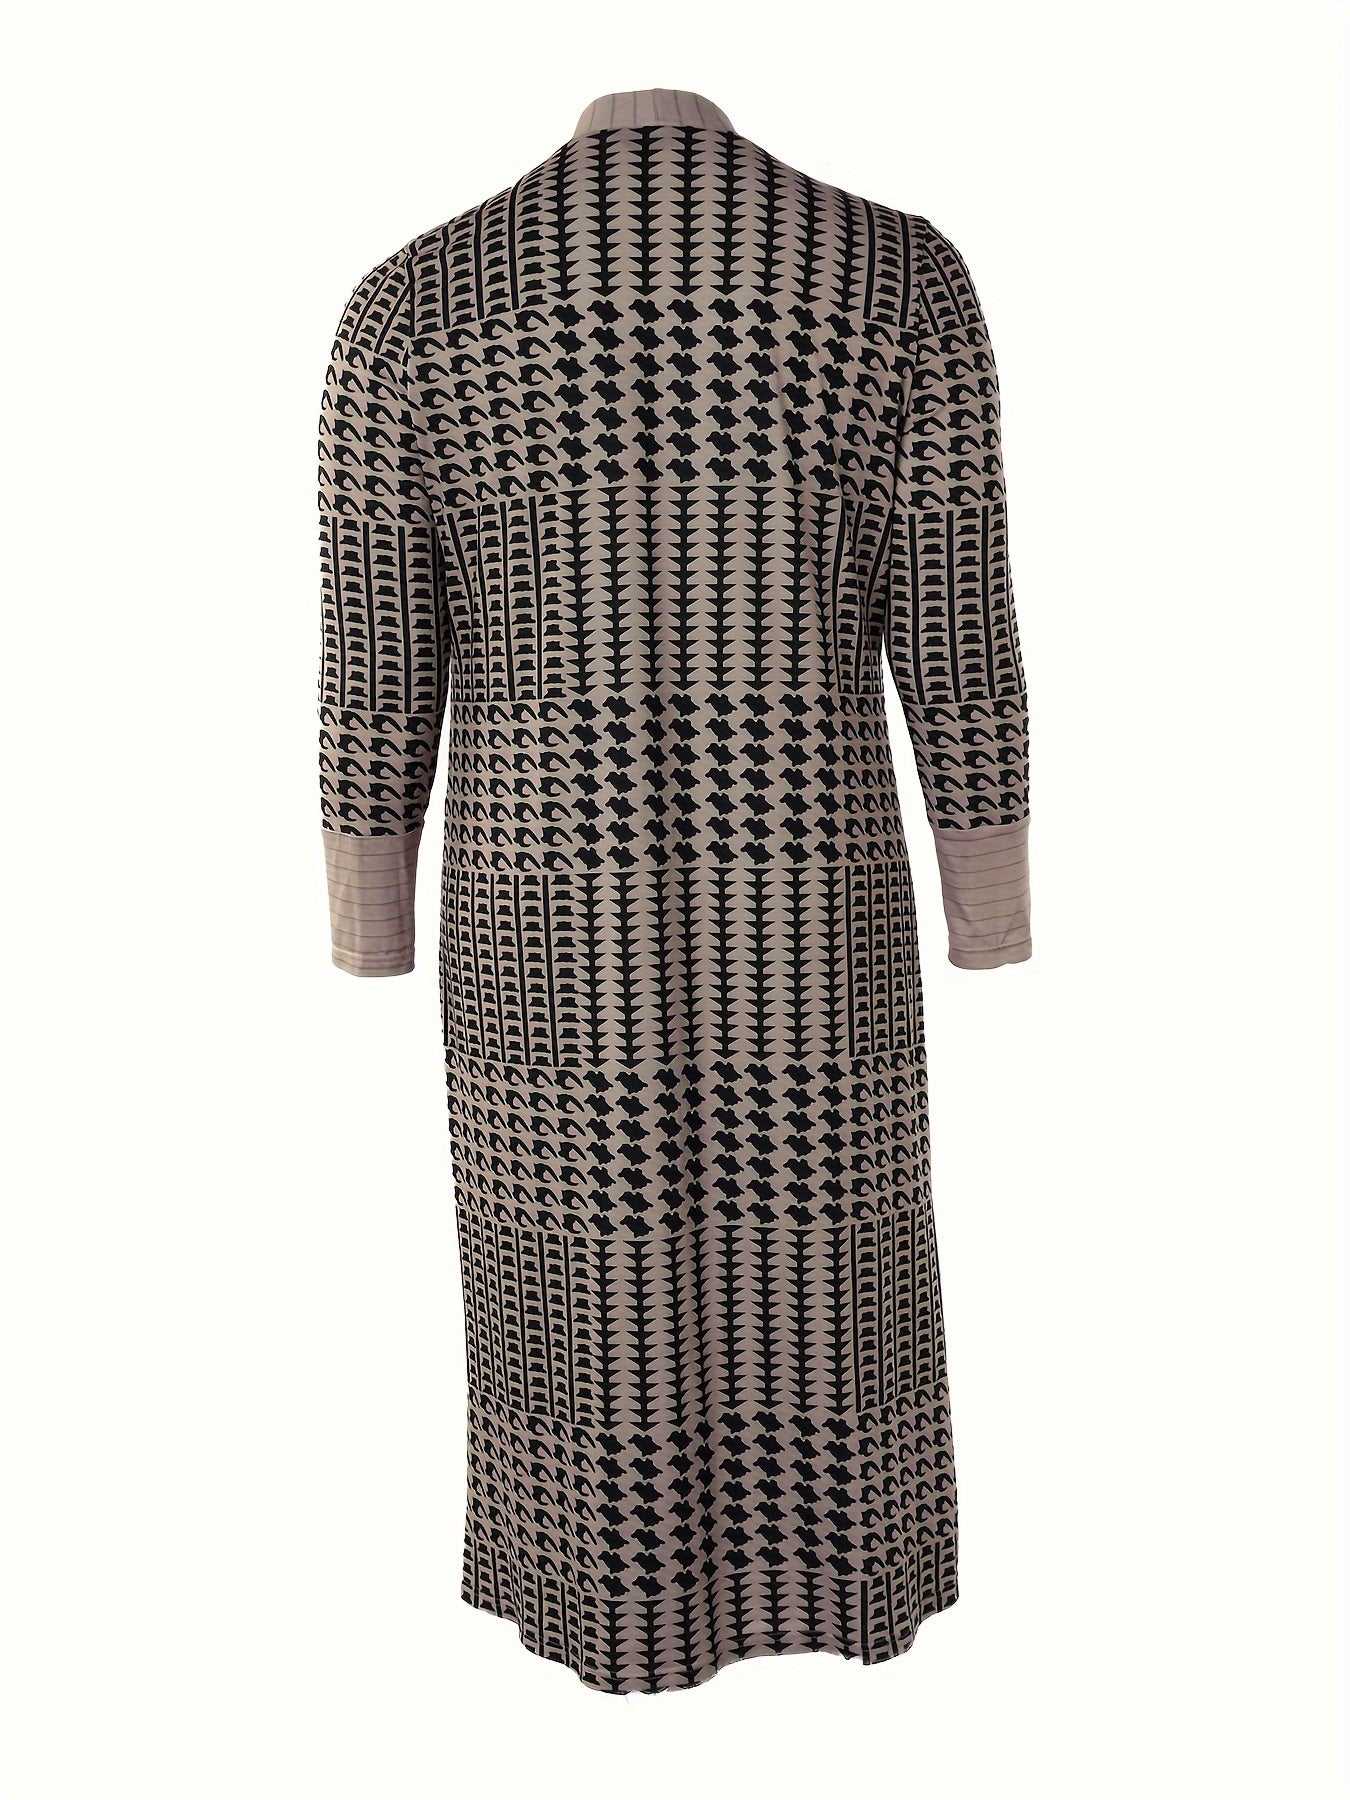 Plus Size Casual Coat, Women's Plus Geometric Print Long Sleeve Open Front Slight Stretch Cardigan Coat